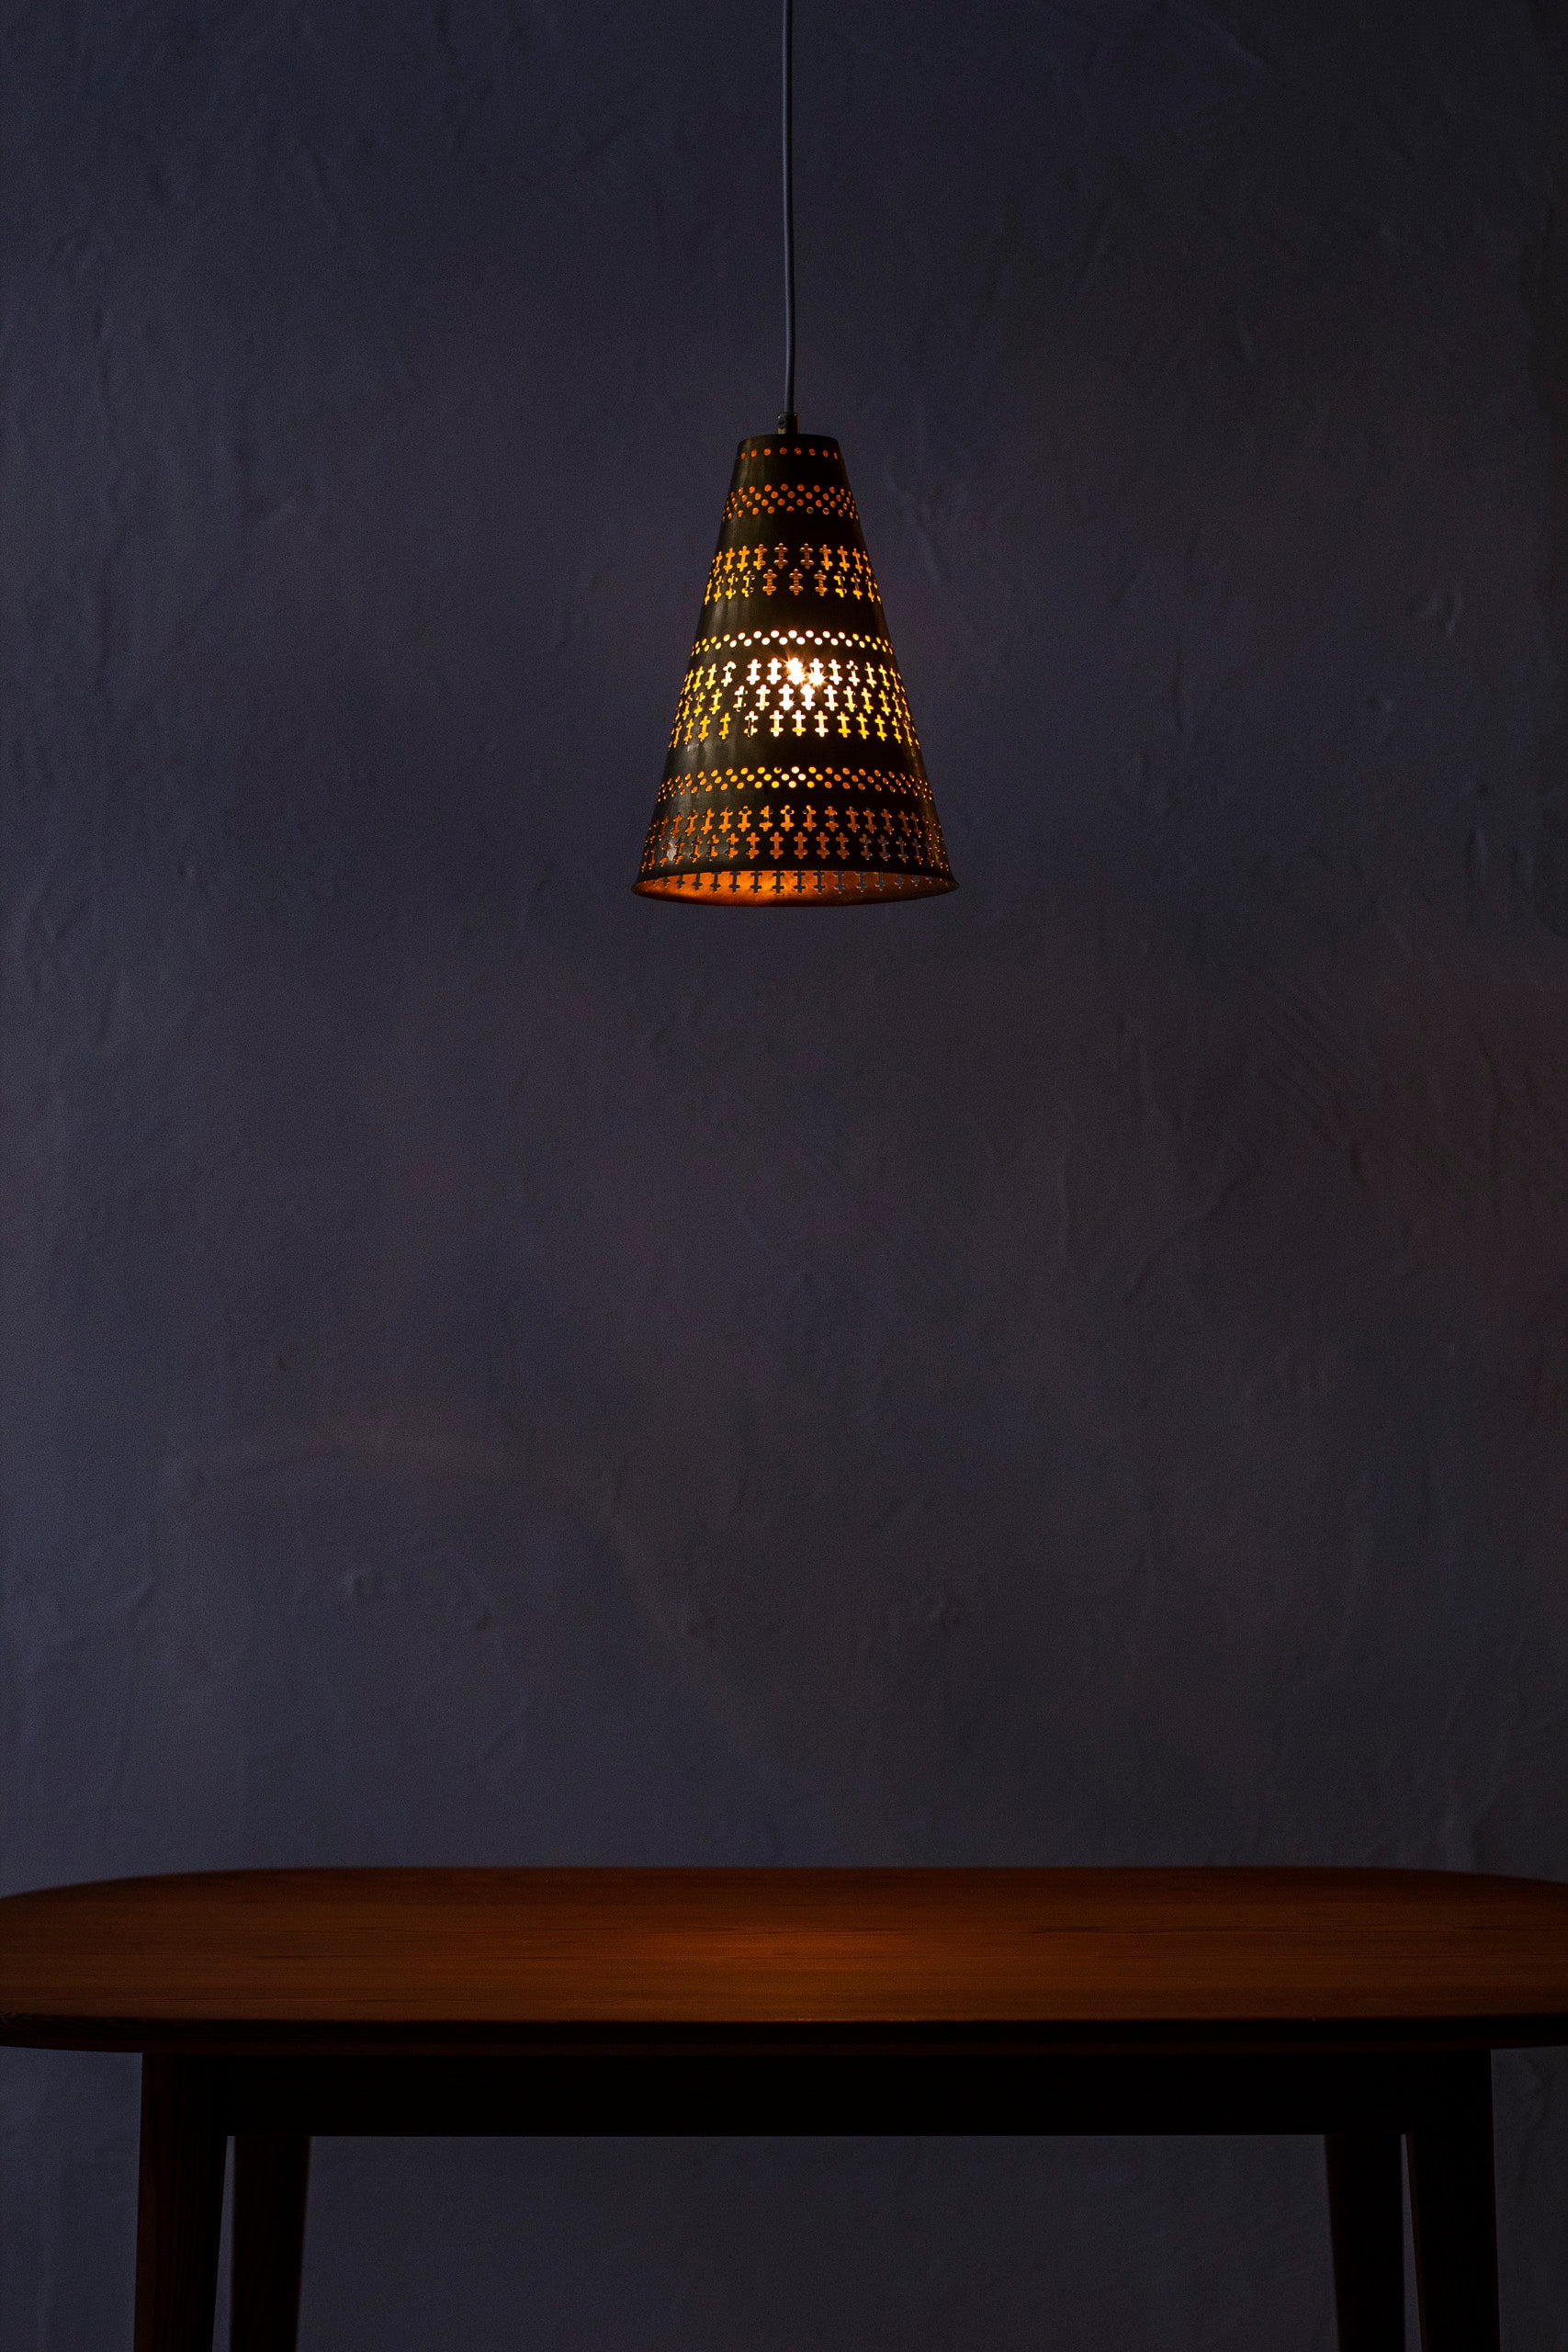 Ceiling lamp model 70/1 by Hans Bergström